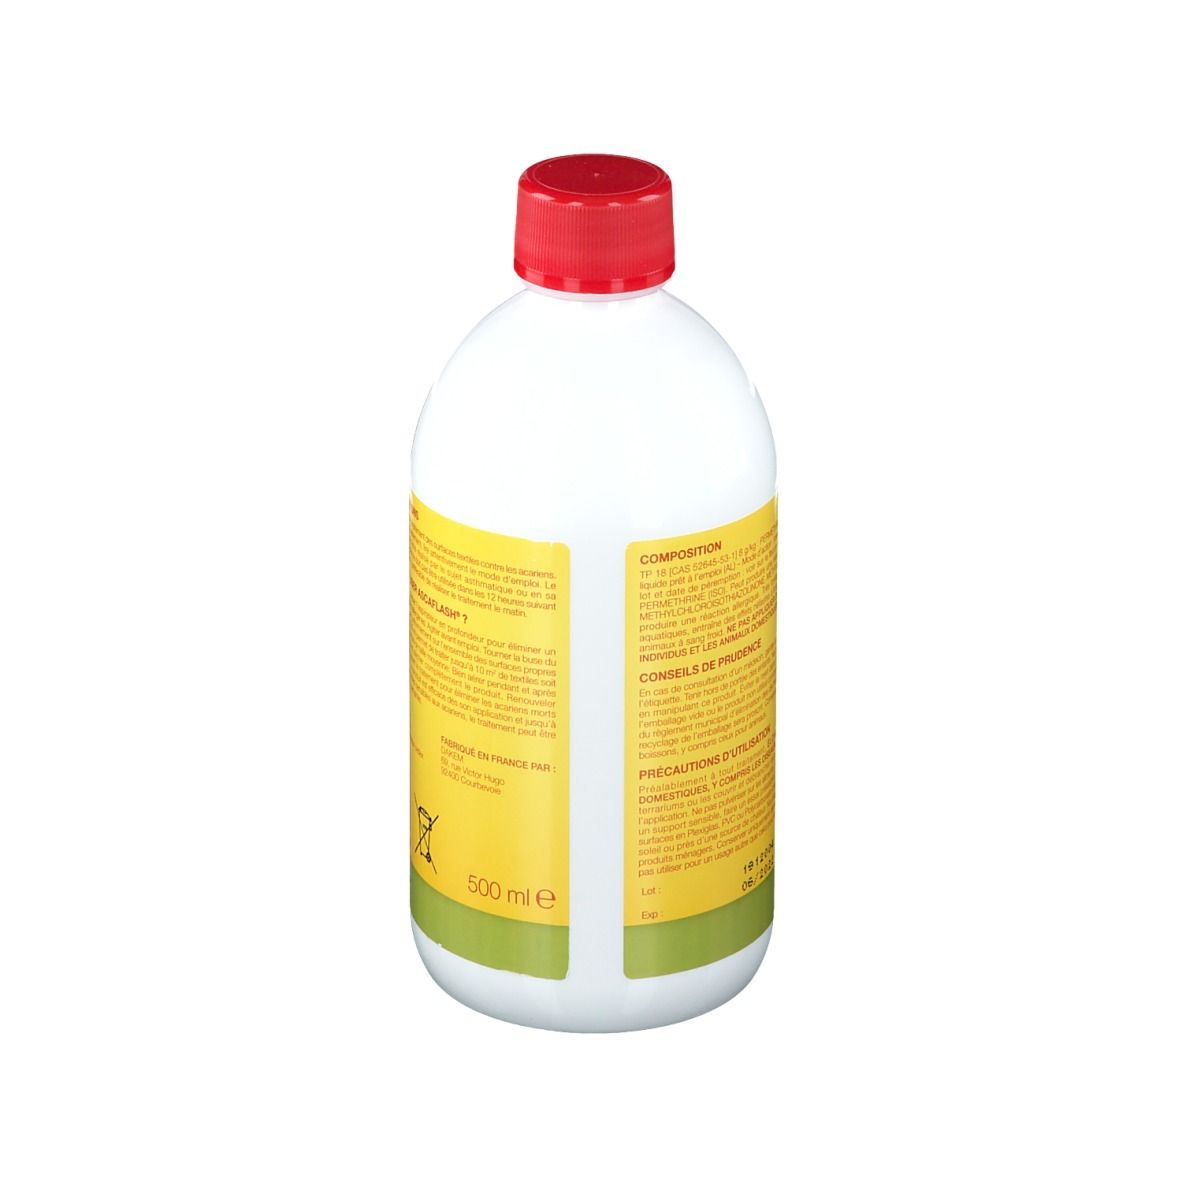 Ascaflash® Spray Anti-Acariens